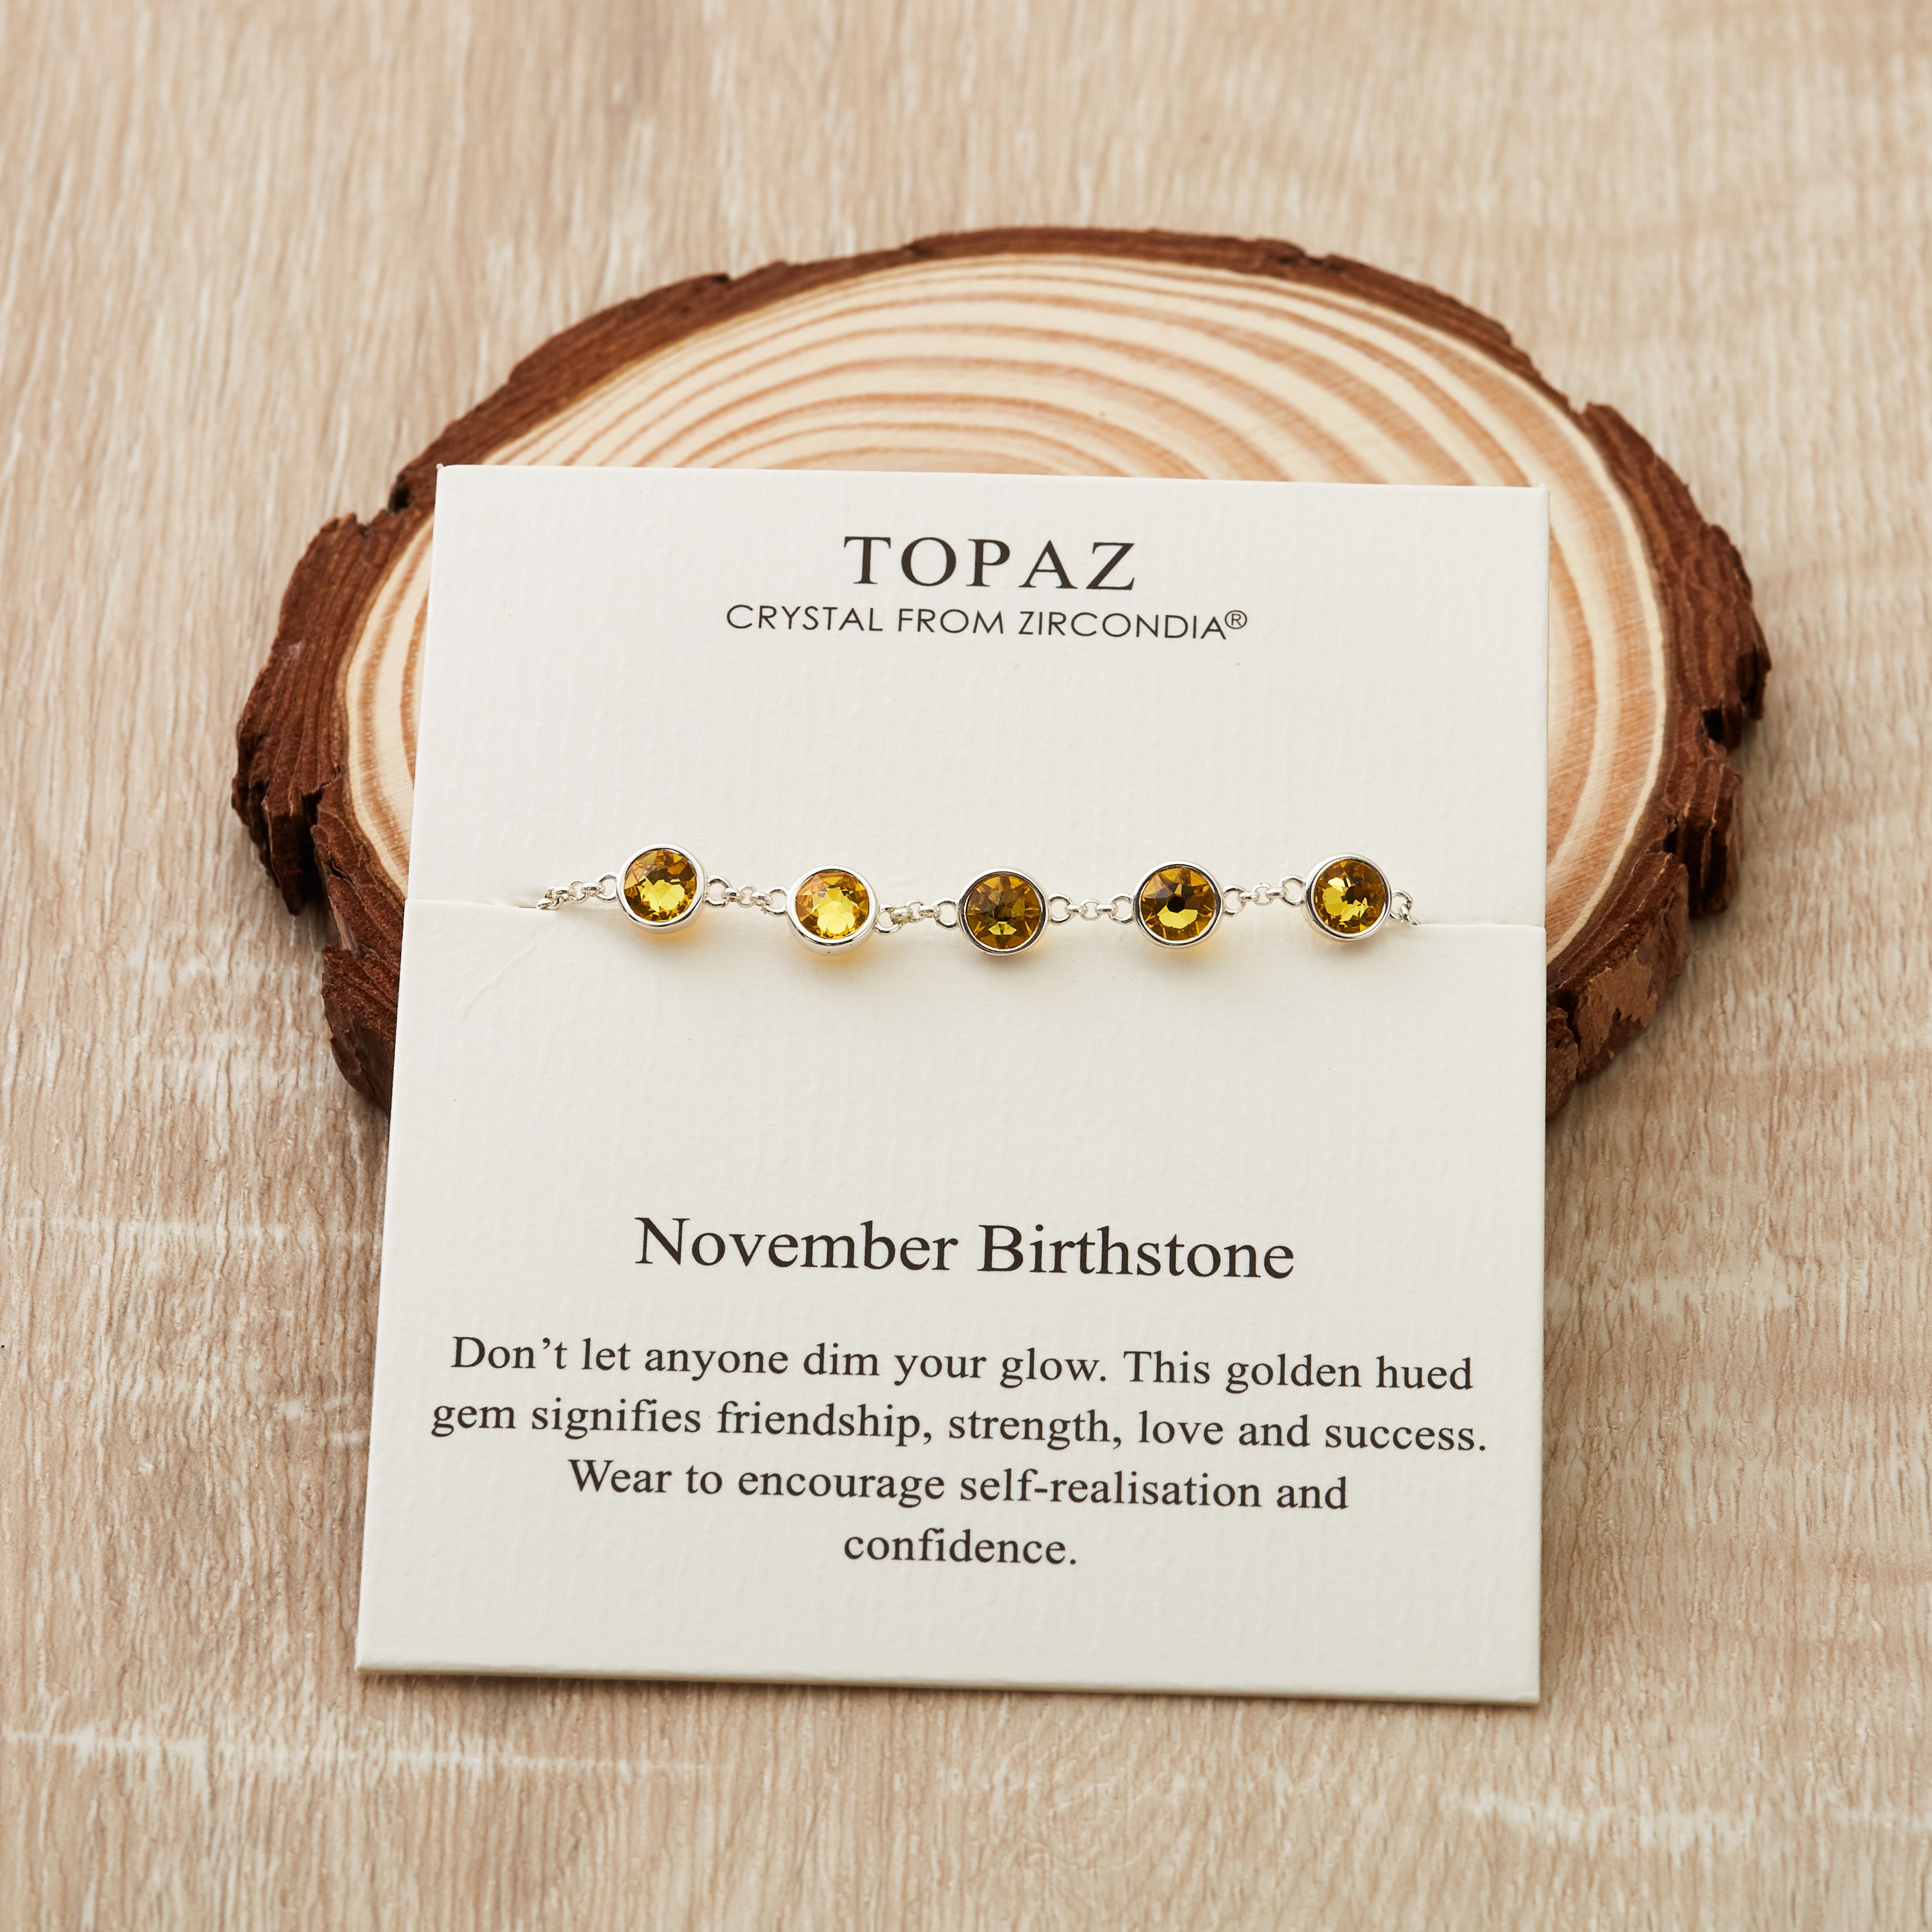 November Birthstone Bracelet Created with Topaz Zircondia® Crystals